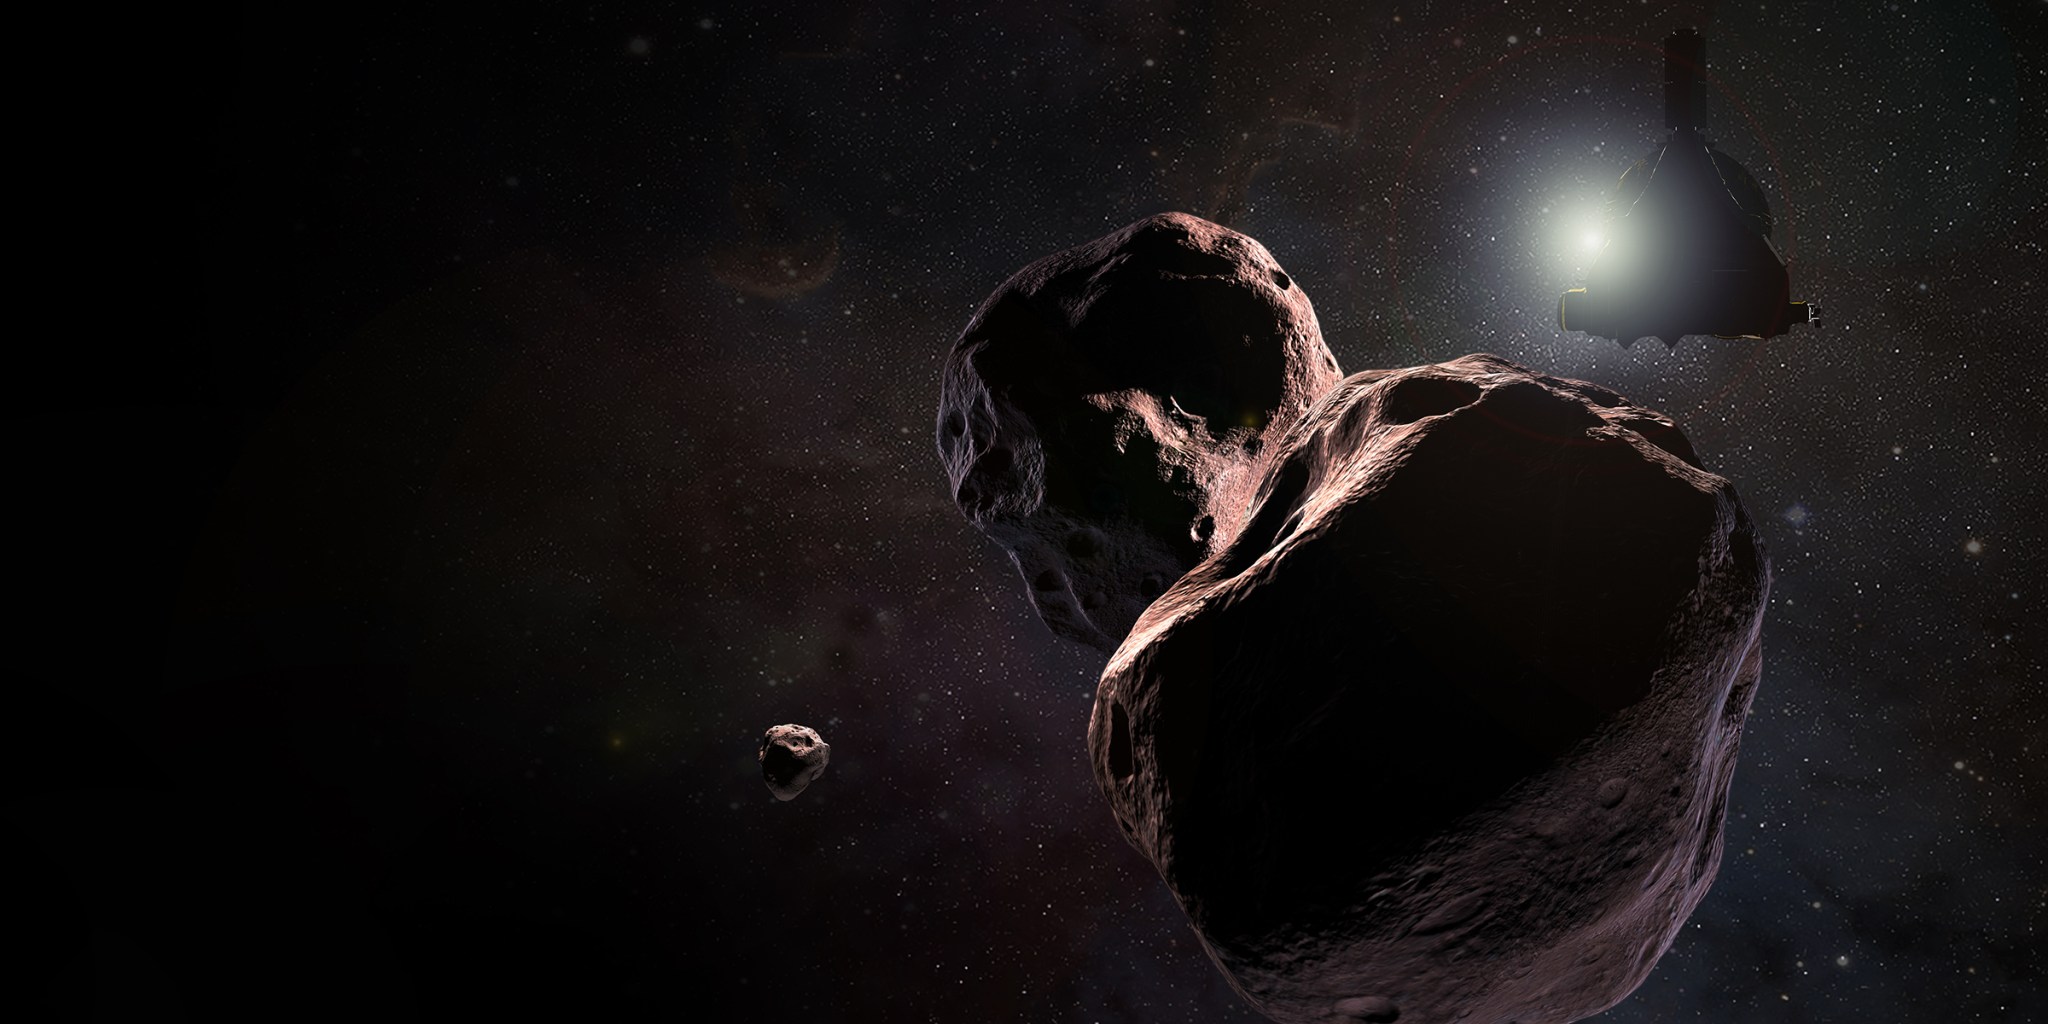 Artist’s impression of NASA’s New Horizons spacecraft encountering 2014 MU69